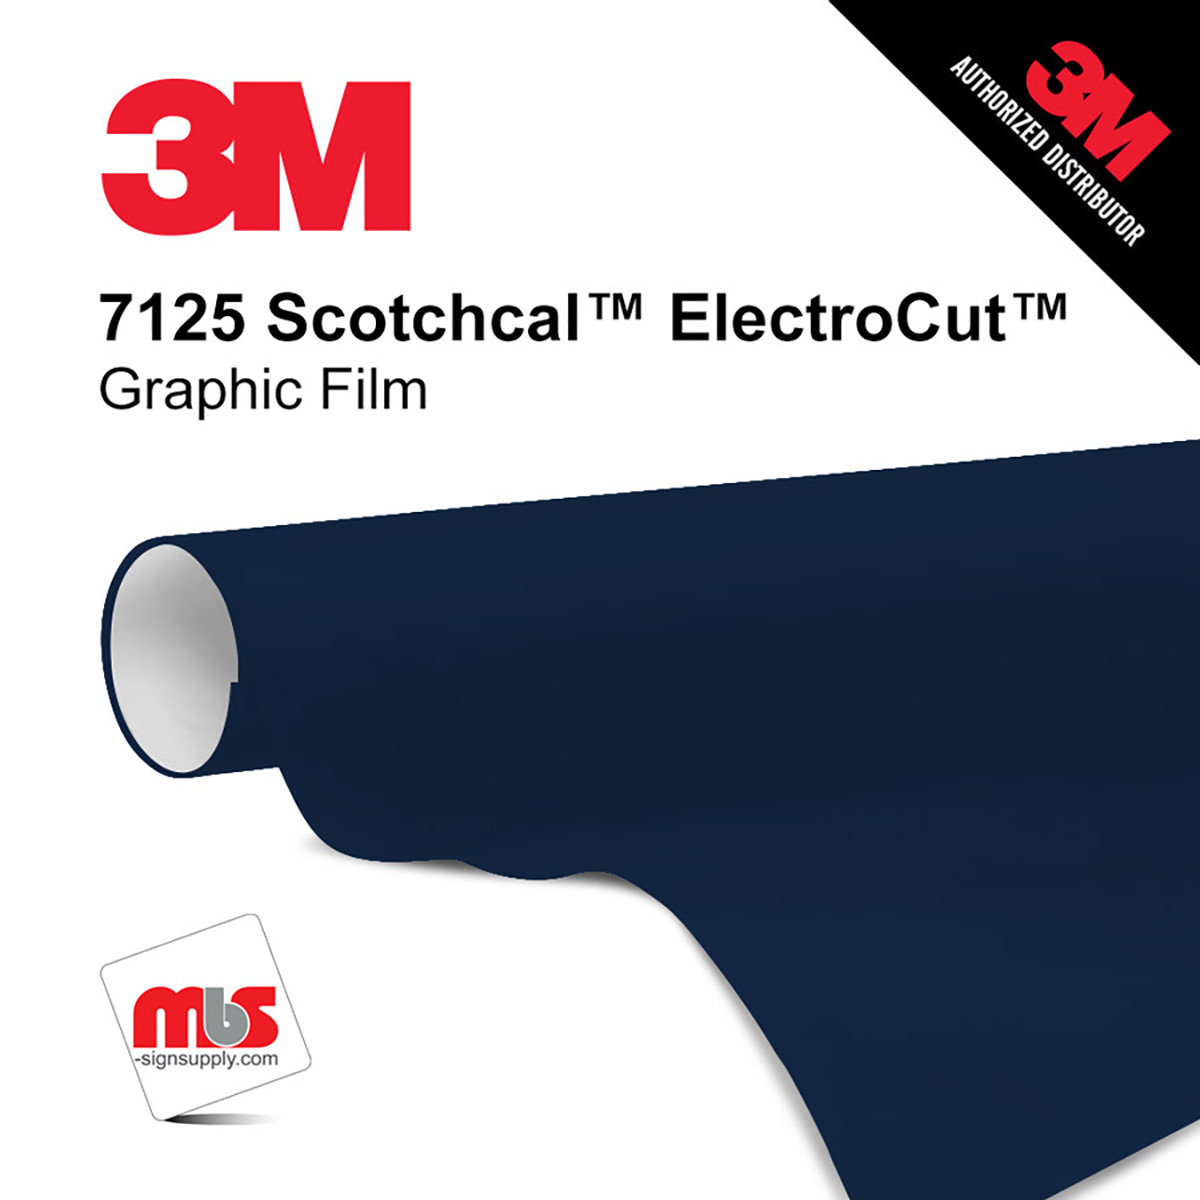 3M™ 7125 Scotchcal Graphic Film - Deep Mahogany Brown